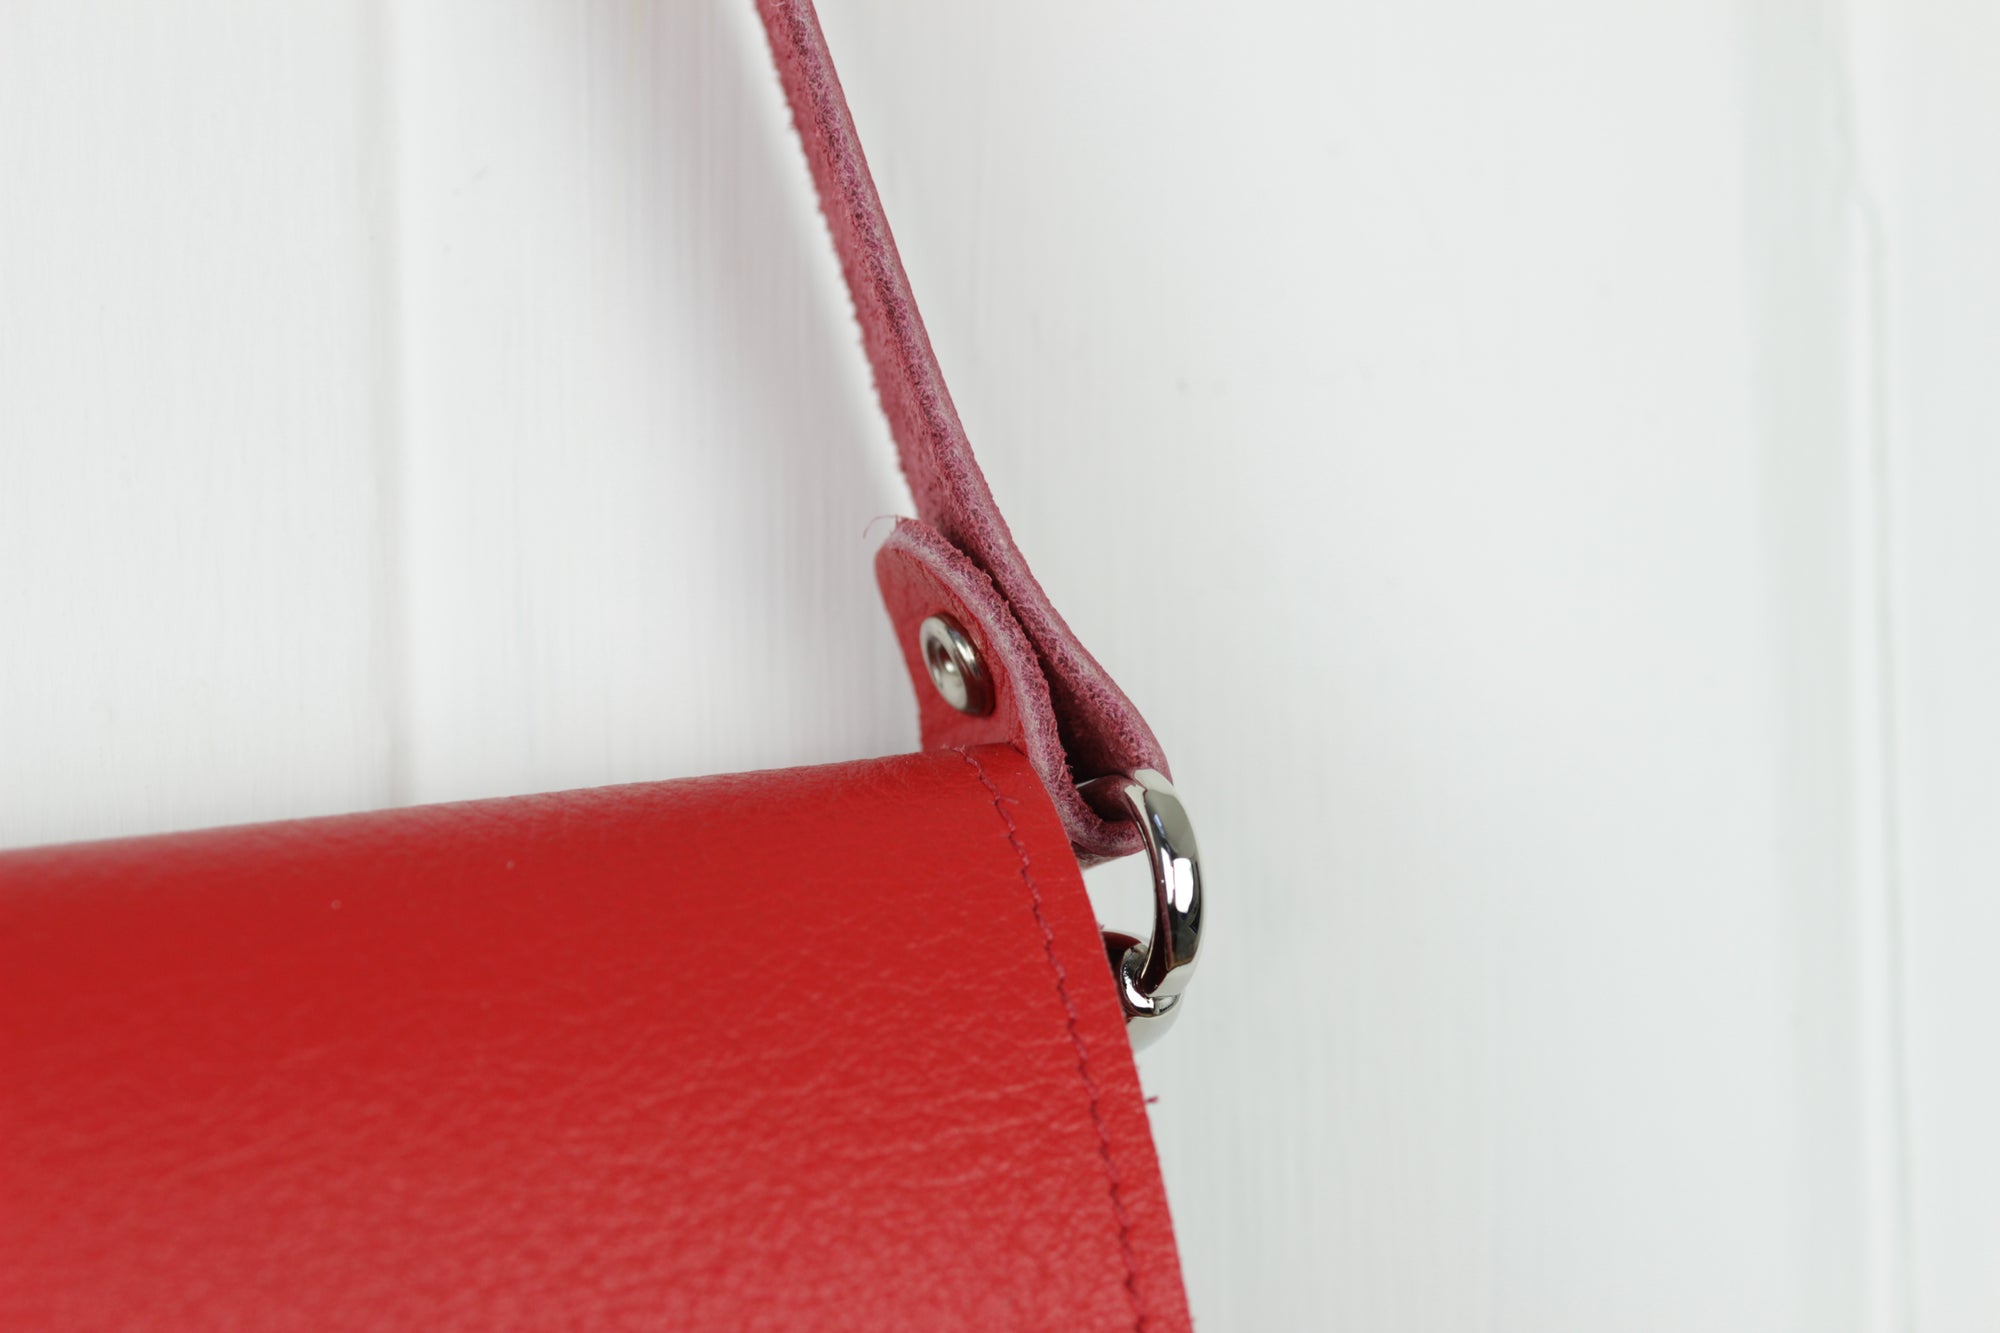 Minimalist Bag, Red, Feene Leather